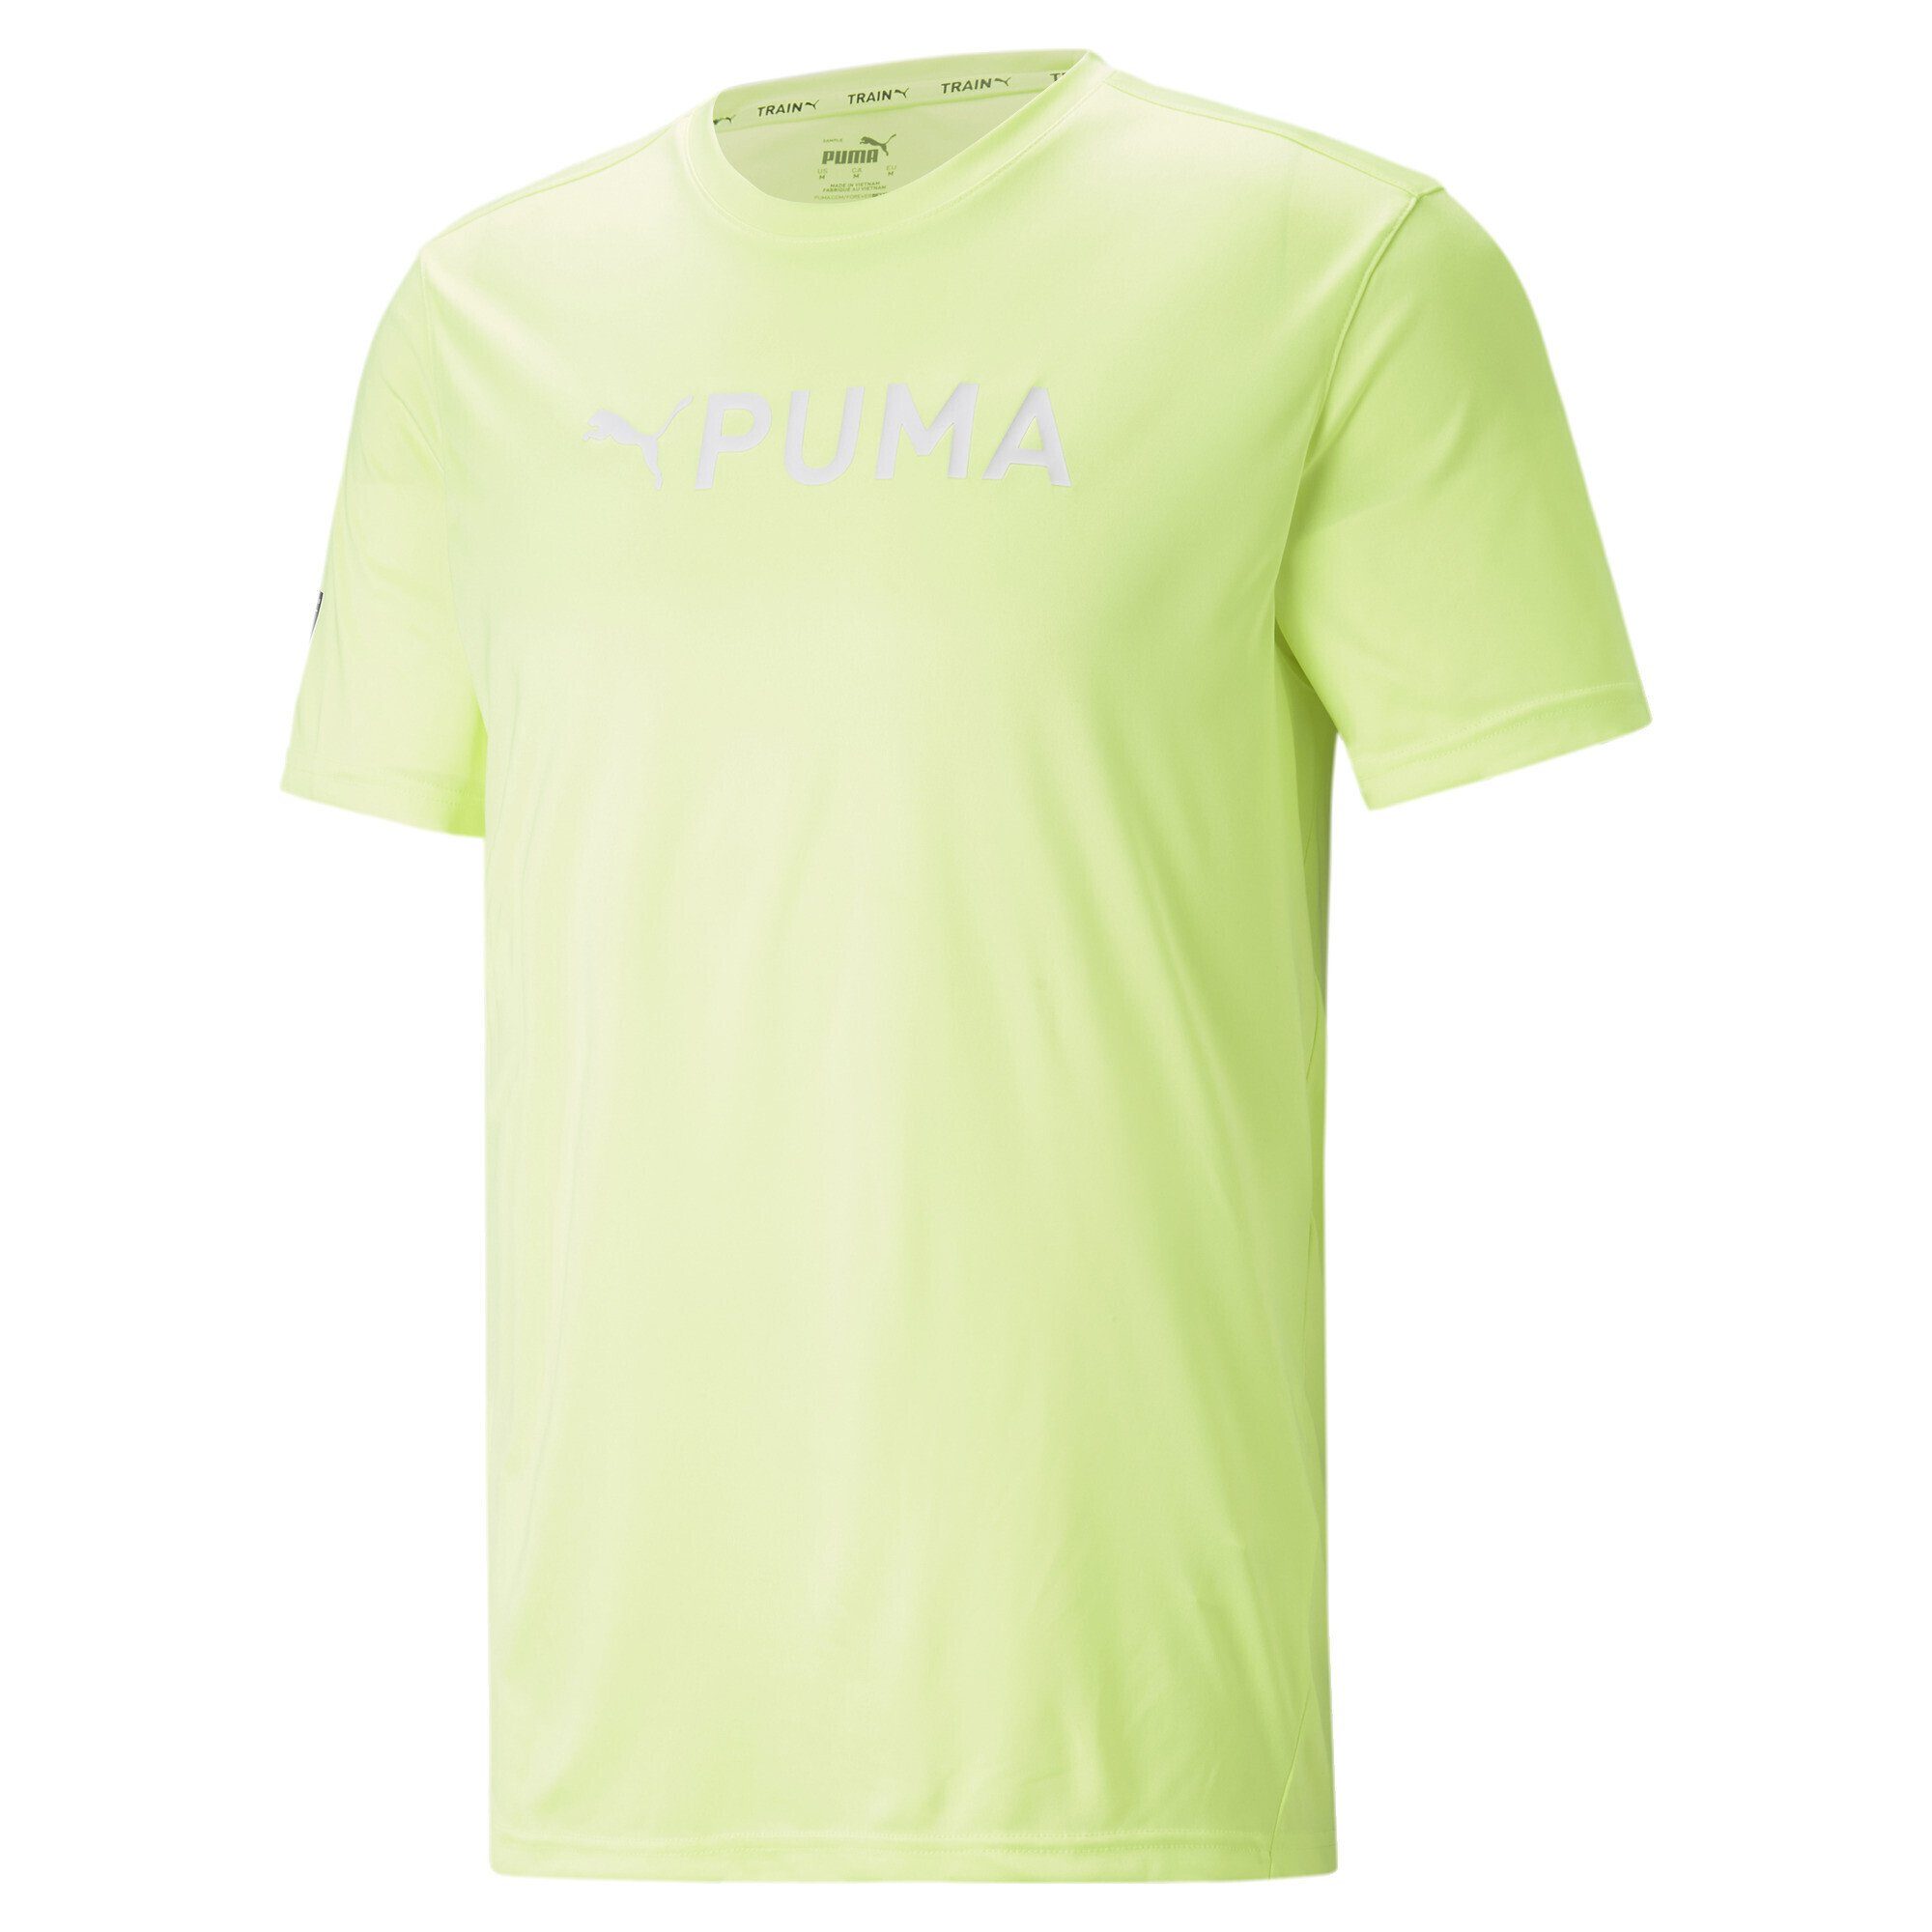 PUMA Herren Fit Yellow PUMA Trainingsshirt Fast Trainings-T-Shirt